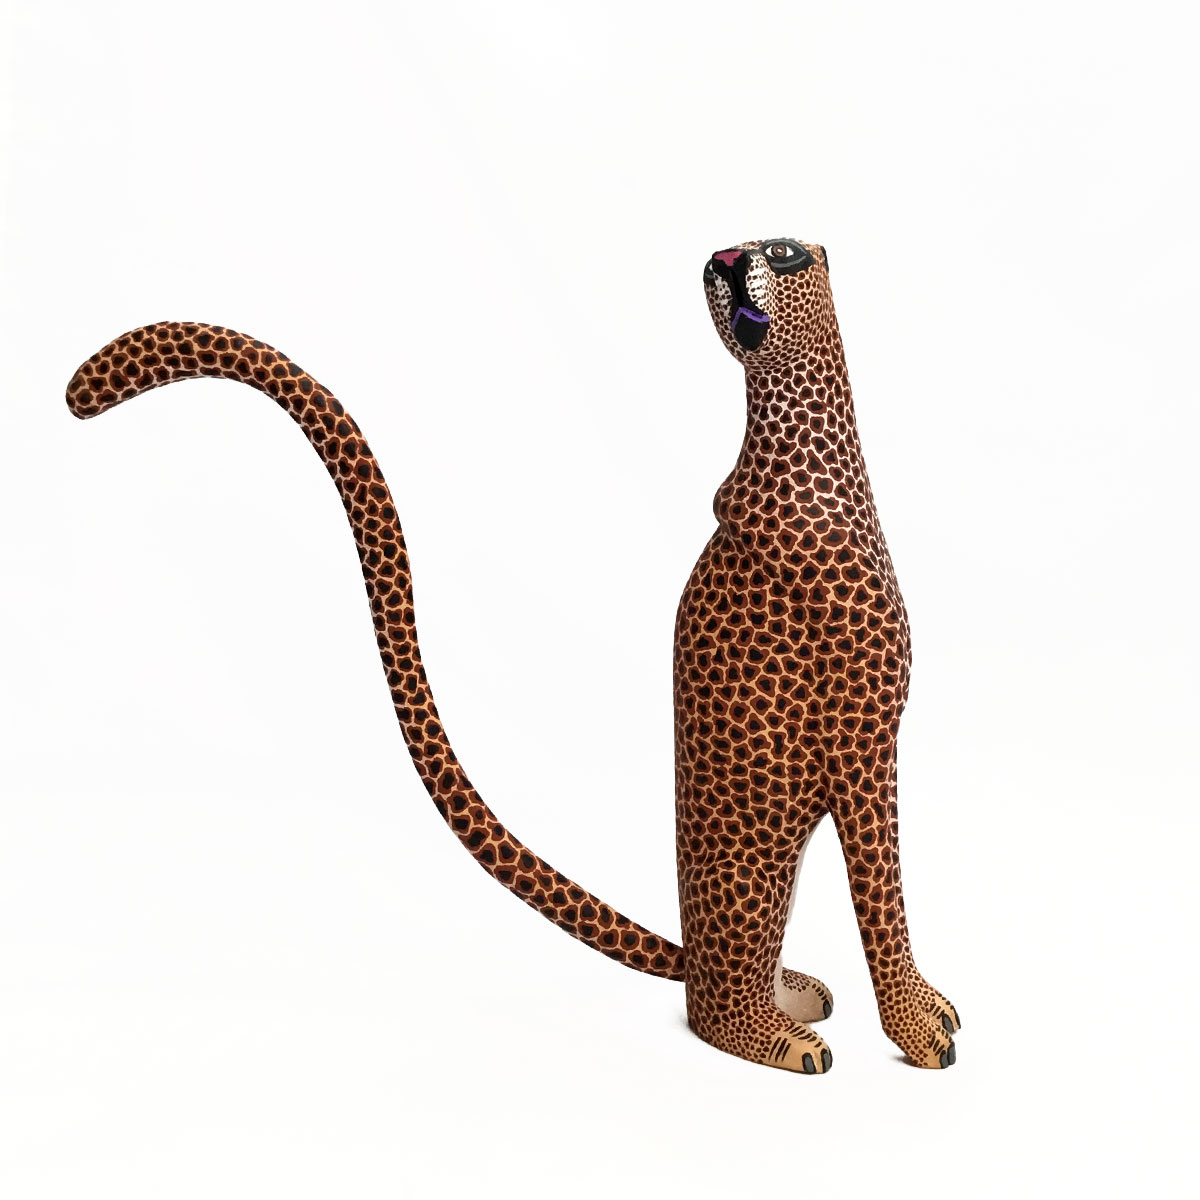 Eleazar Morales Eleazar Morales: Sleek Cheetah African Animals